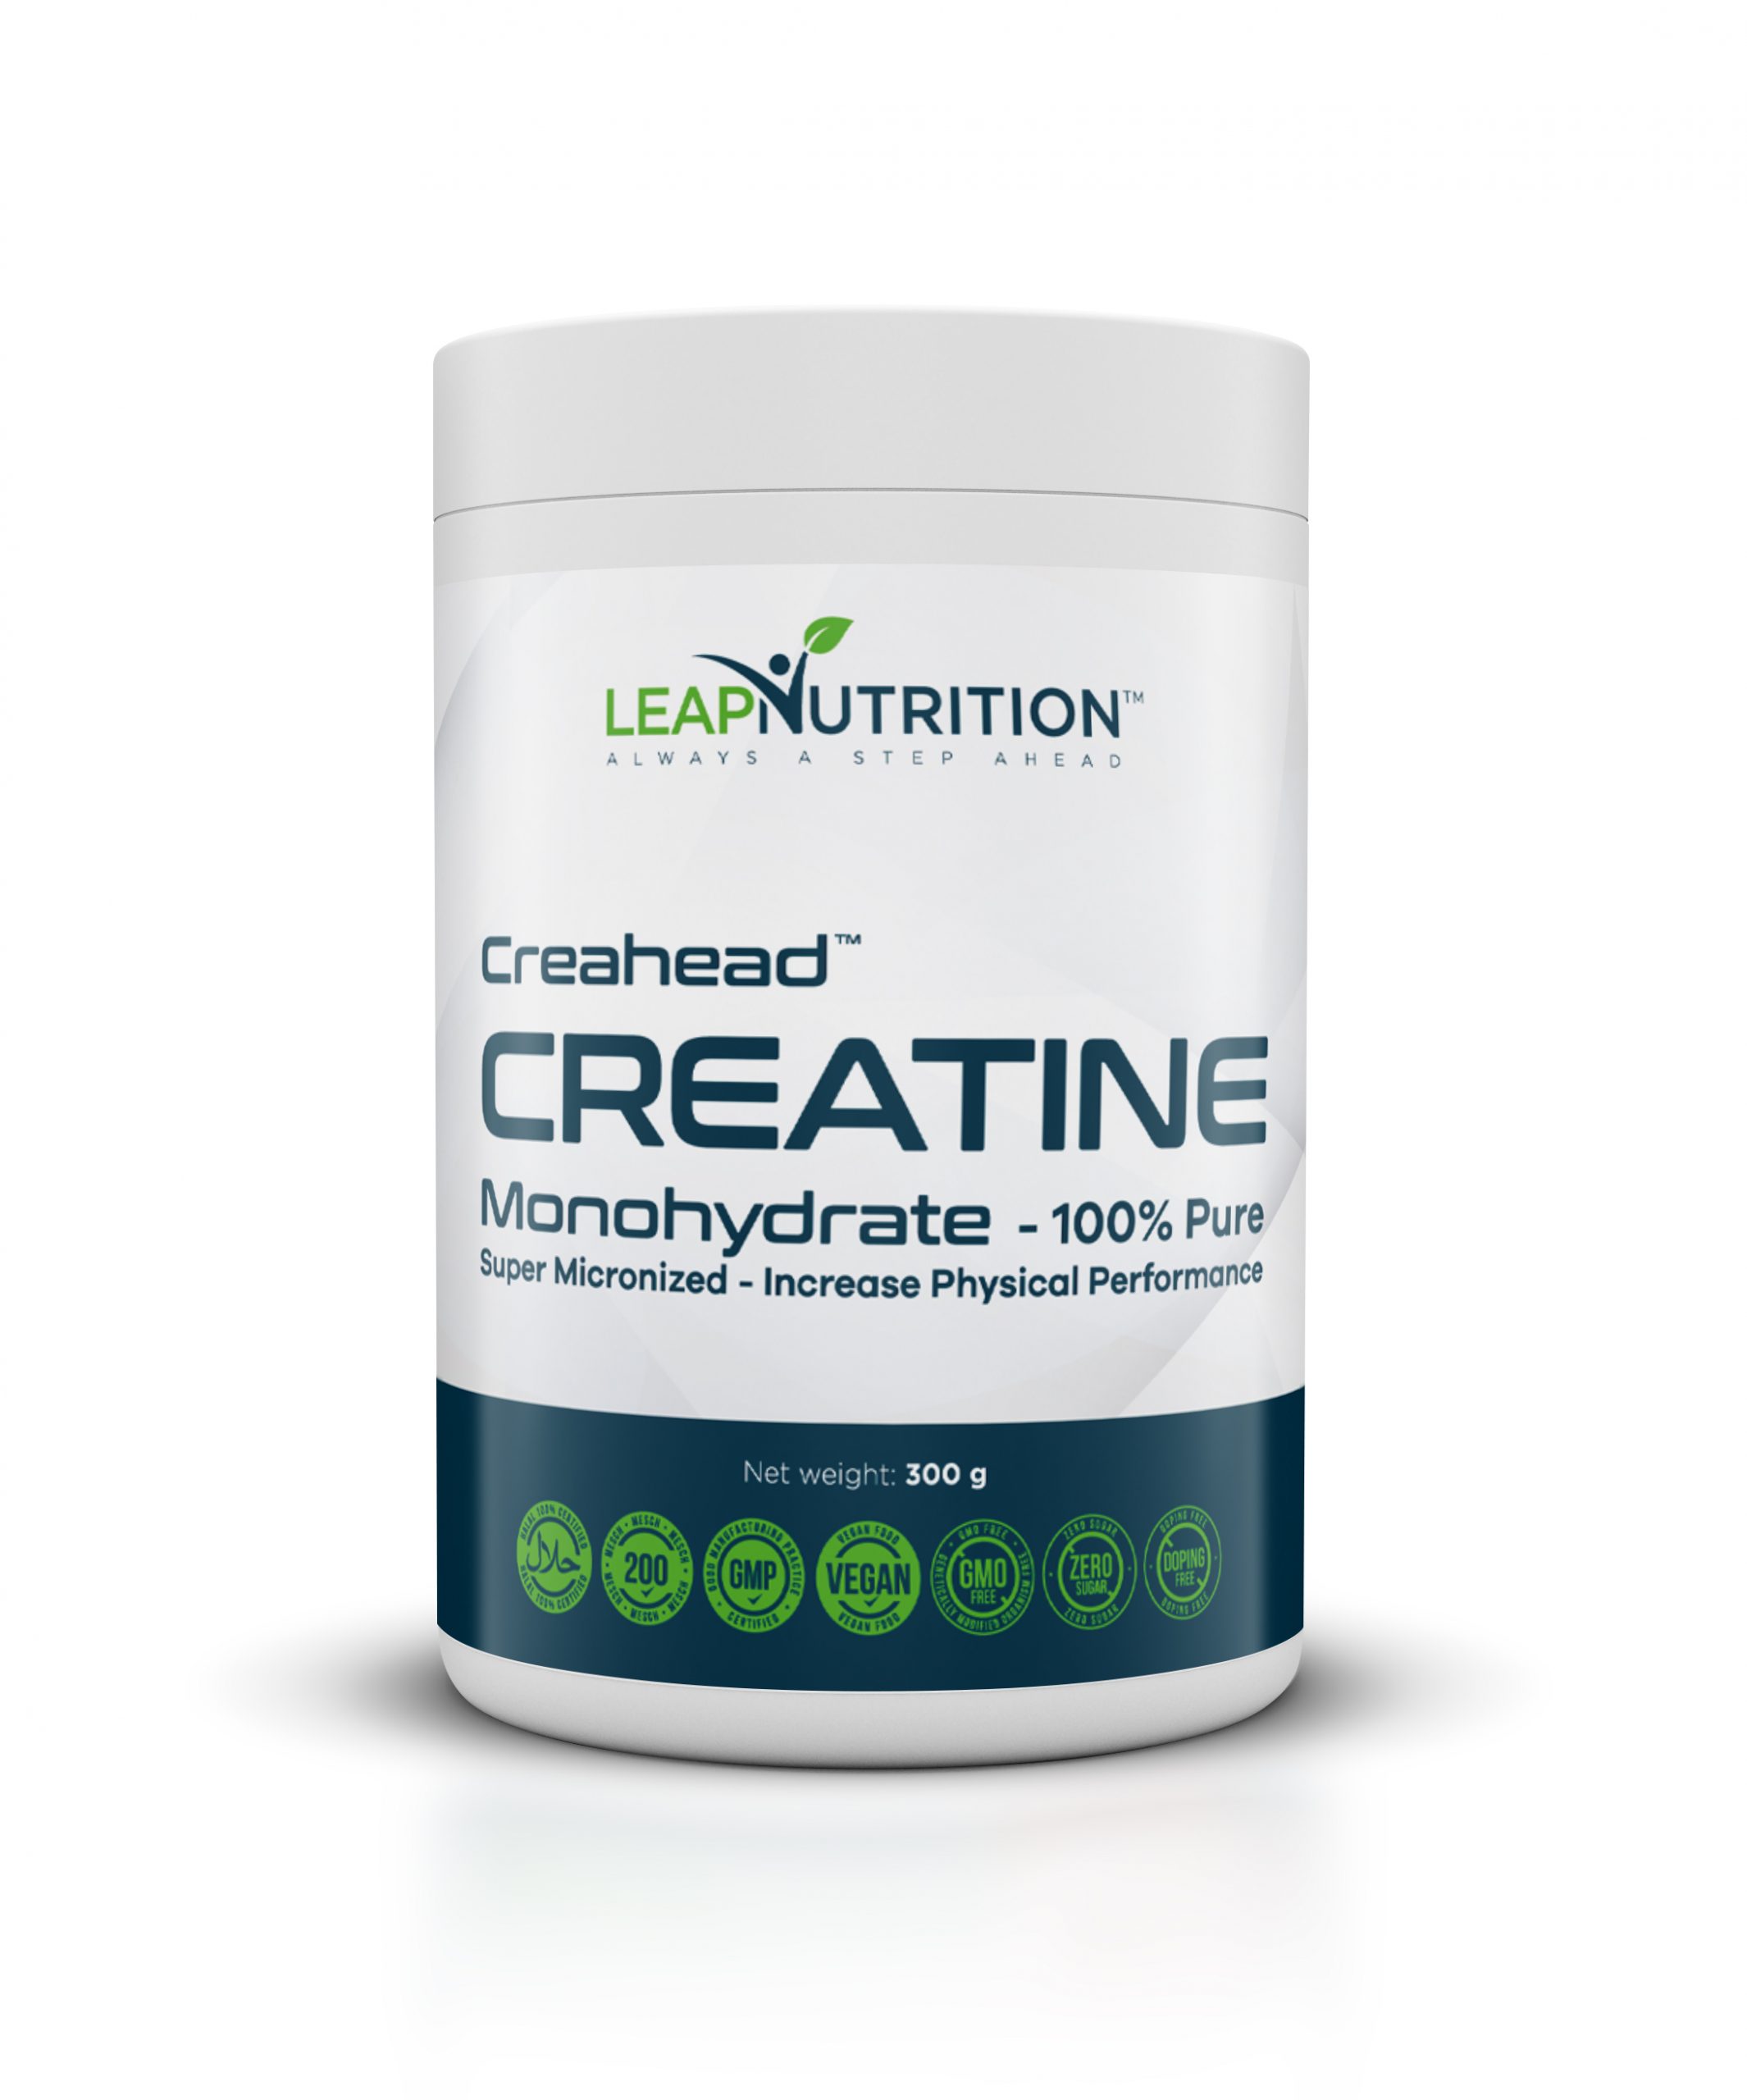 Leap Nutrition Creahead Creatine